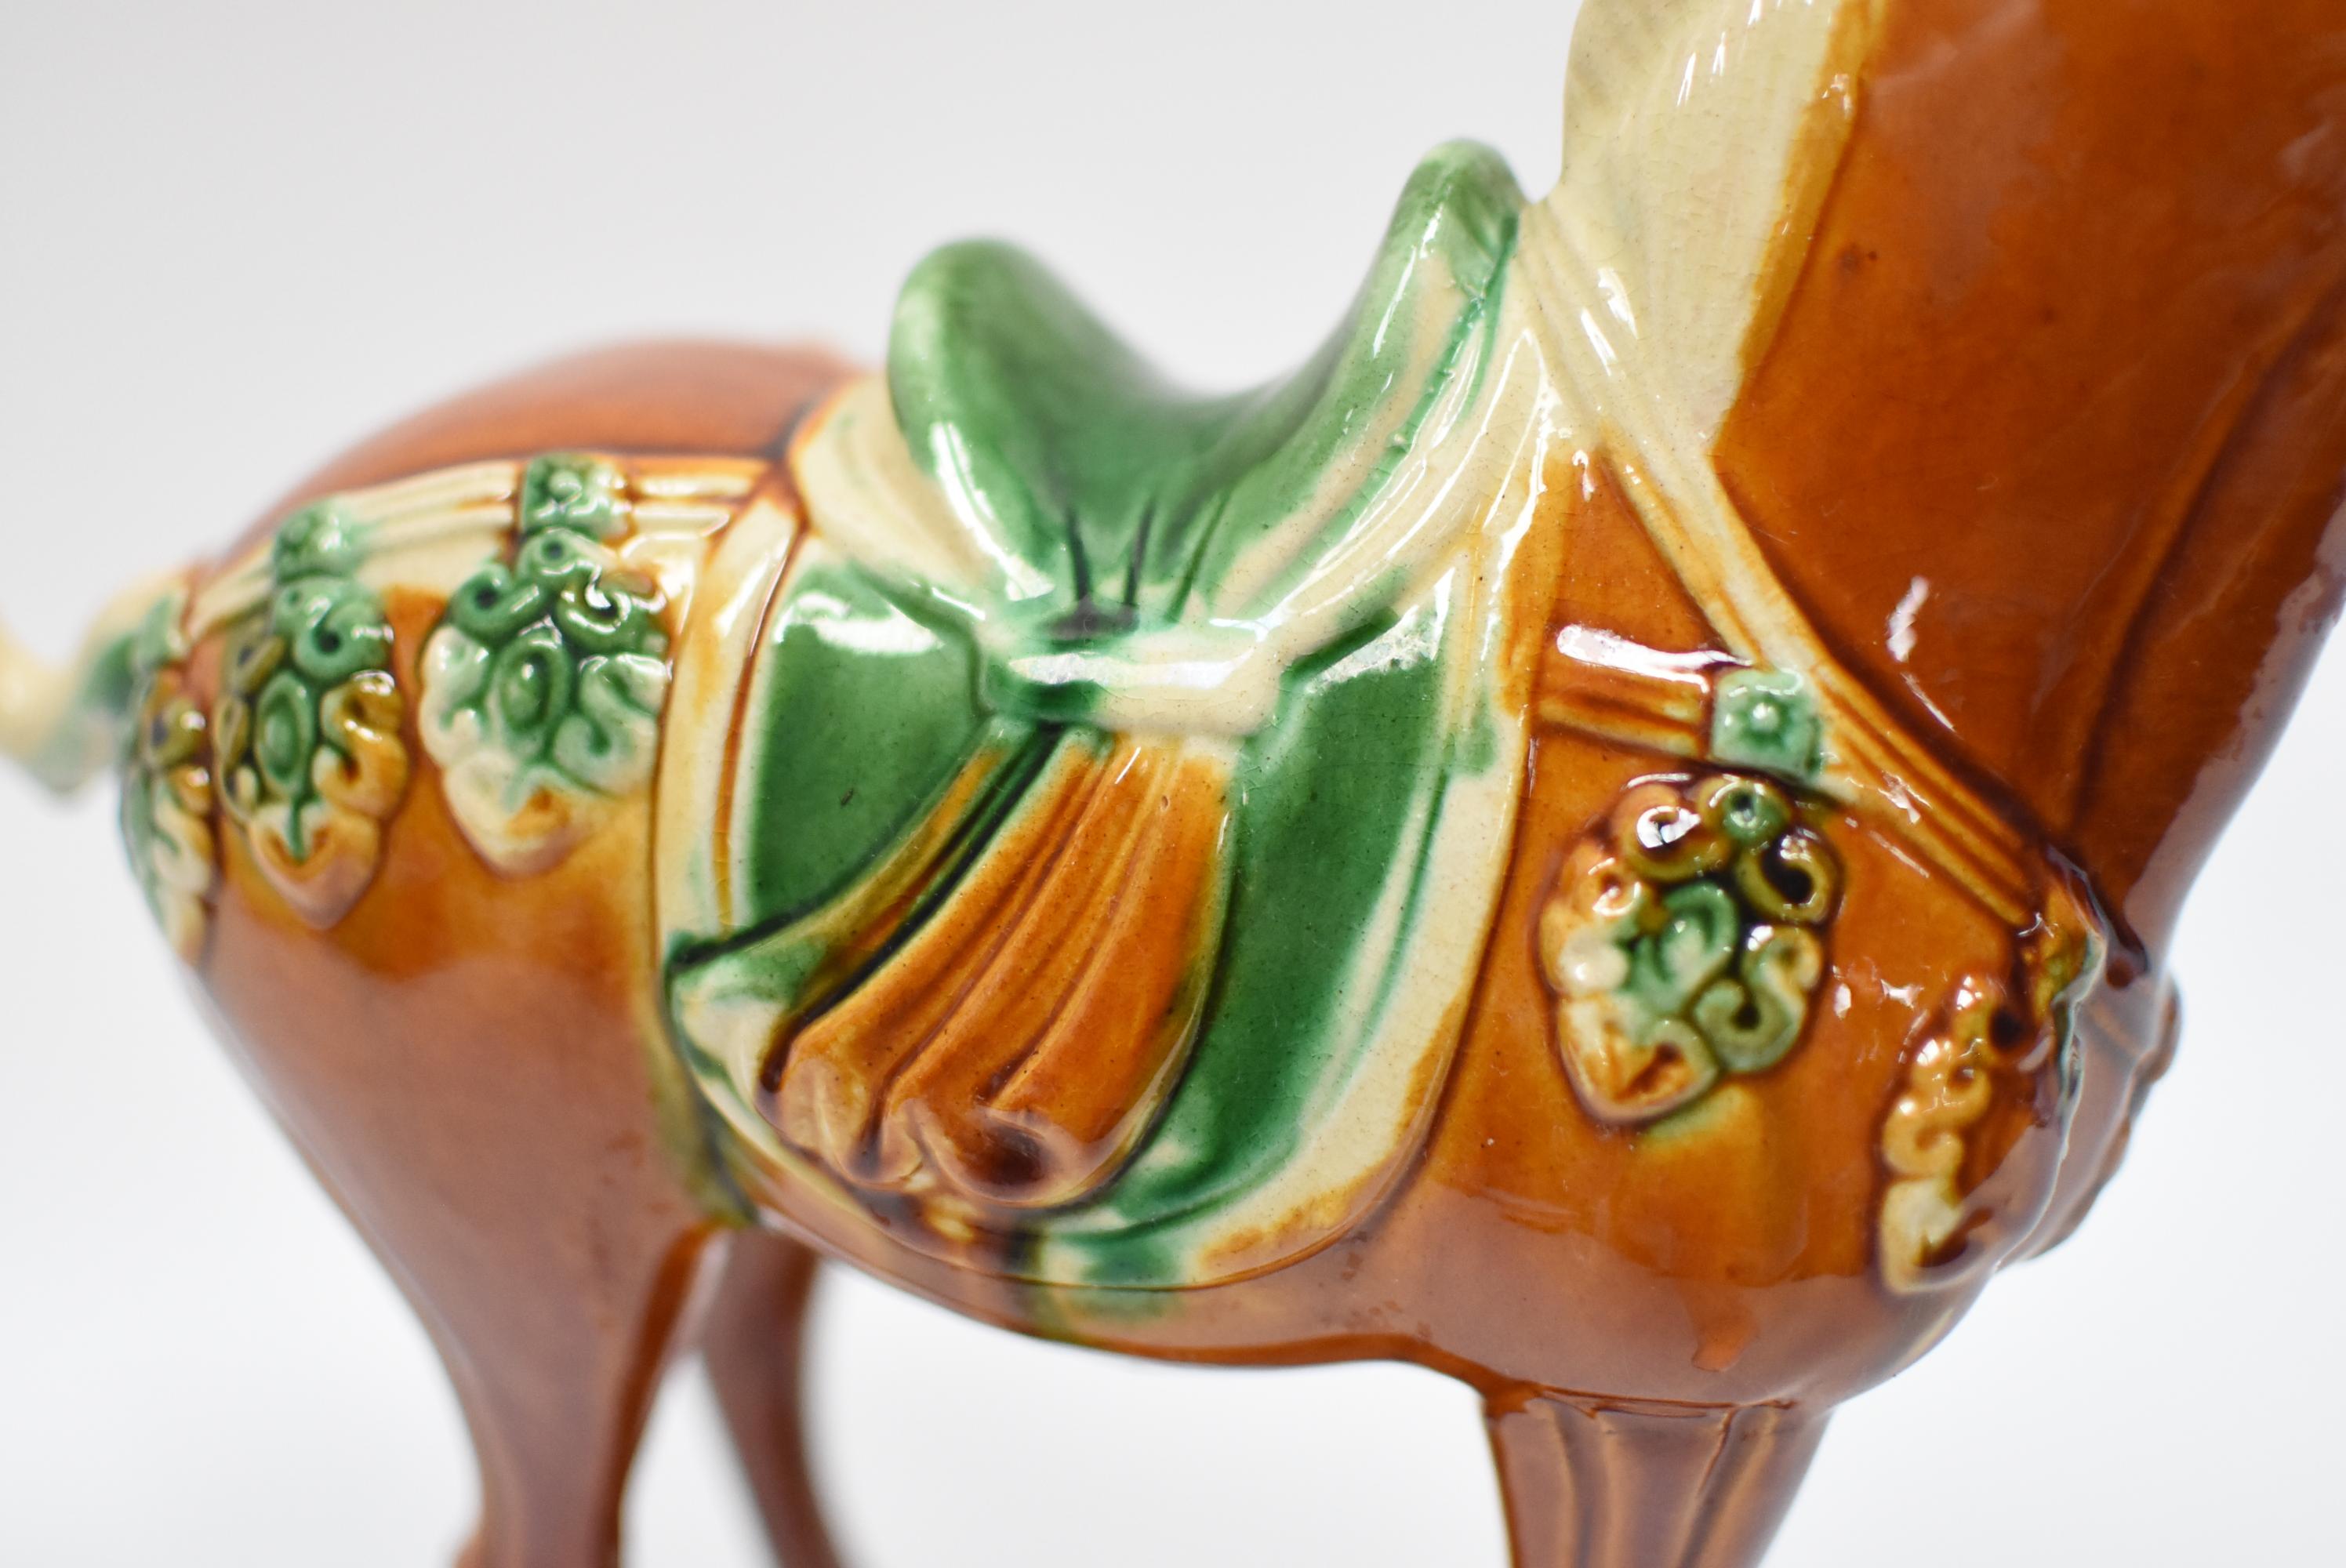 chinese porcelain horse